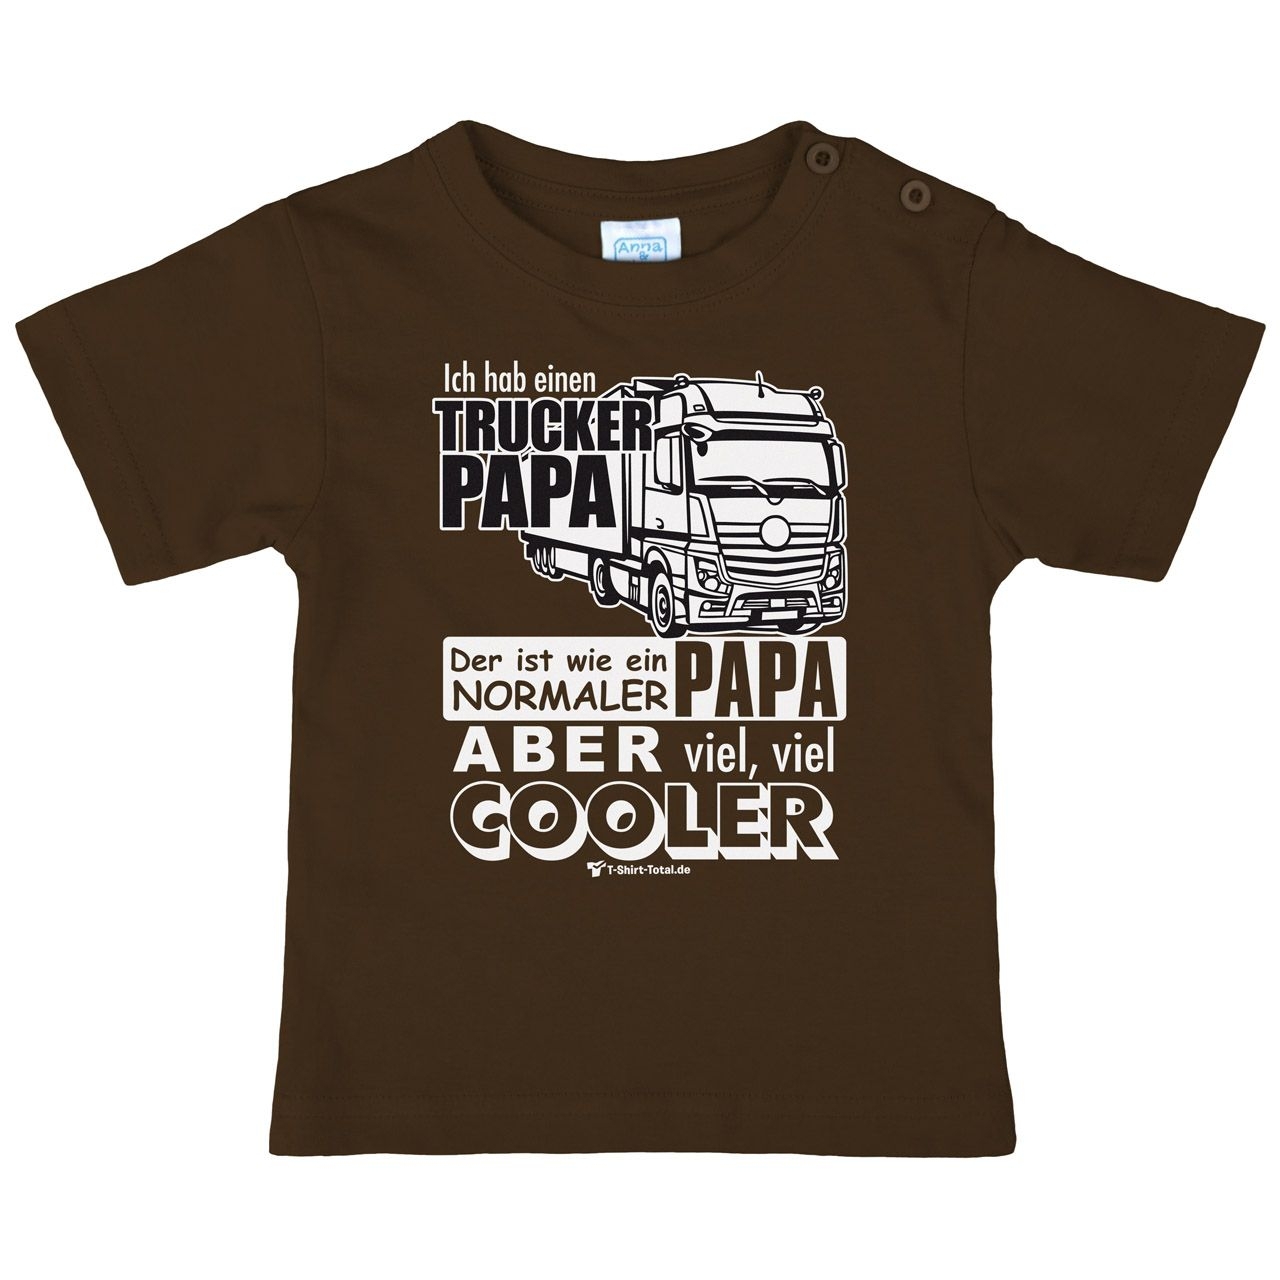 Trucker Papa Kinder T-Shirt braun 68 / 74